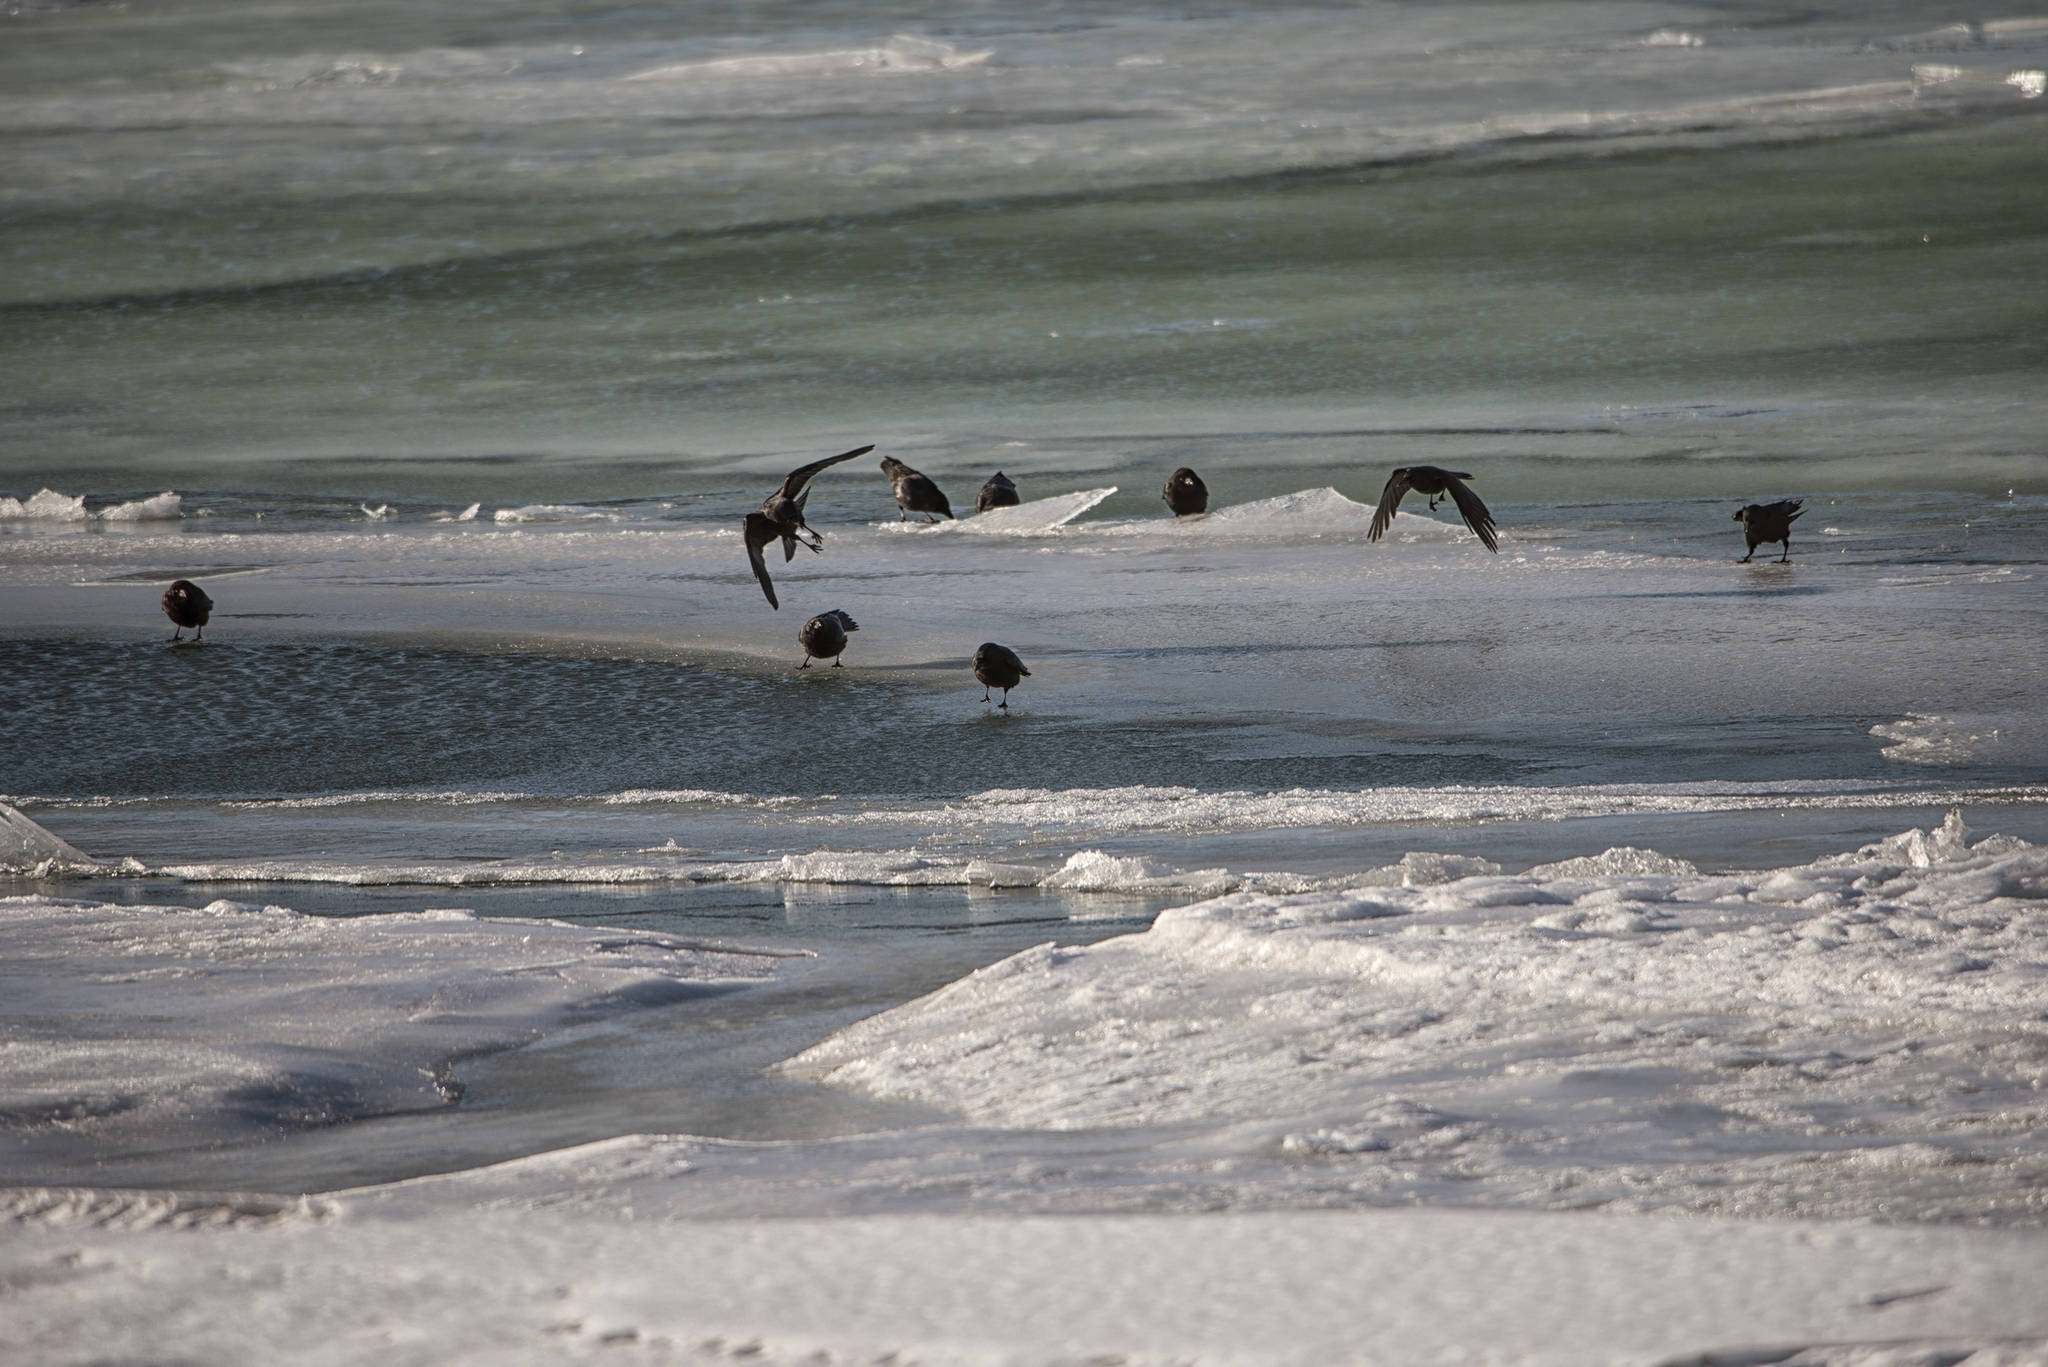 Nine crows survive in sub-Arctic Lemon Creek on Saturday, Feb. 13. (Courtesy Photo / Kenneth Gill, gillfoto)